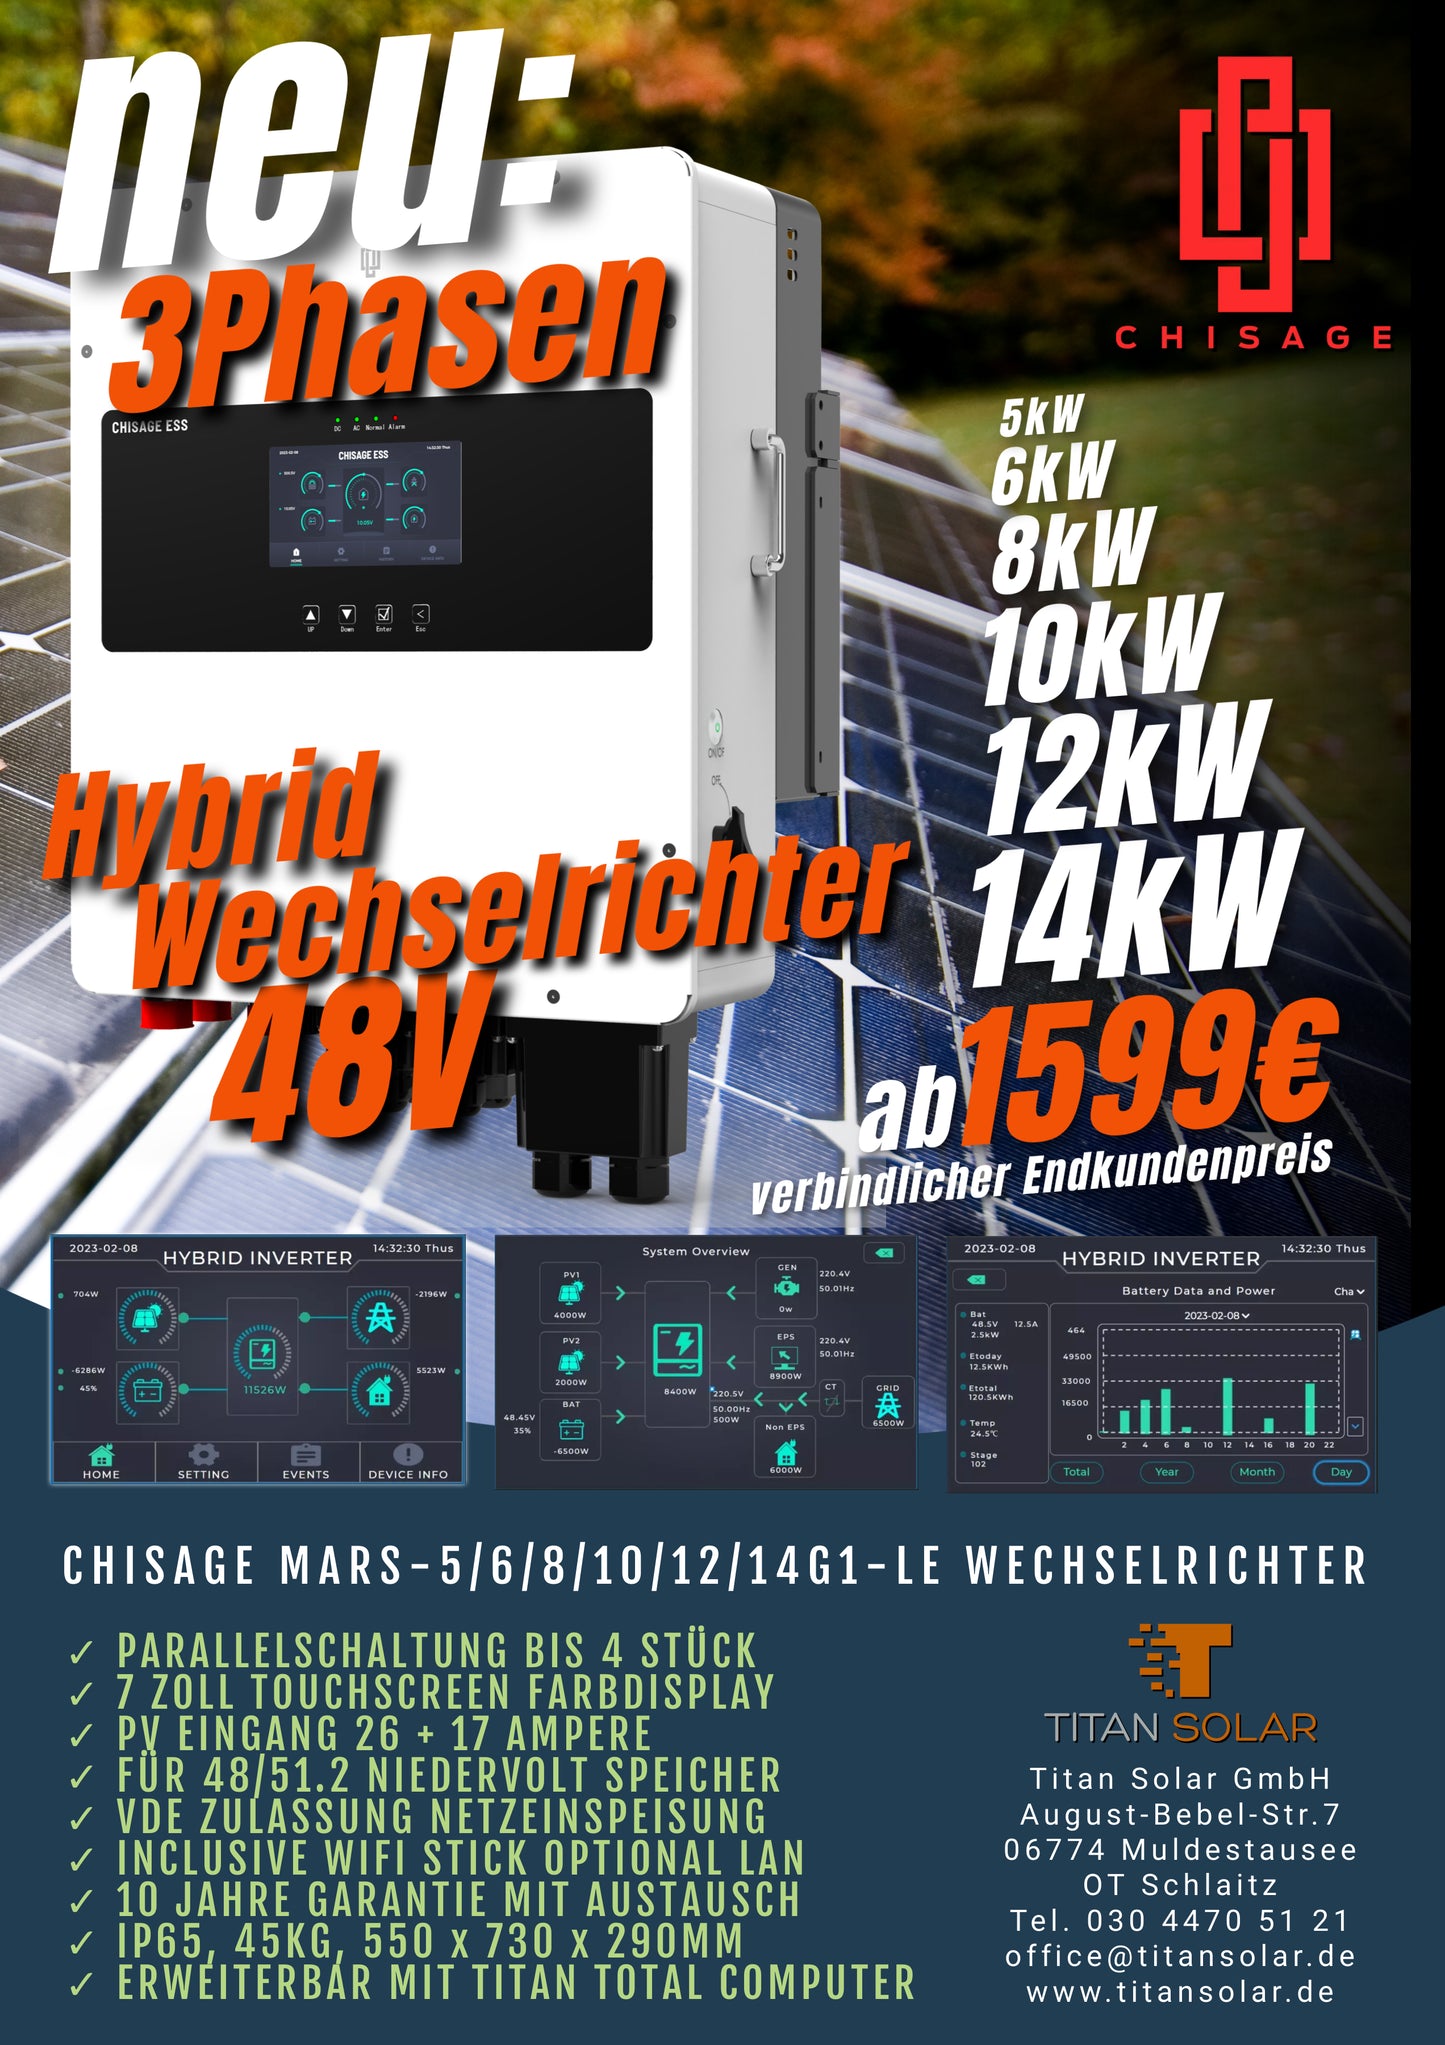 Art. 1514 - 14Kw Titan Solar Chisage Mars-14G2-LE 3 Phasen Hybrid Inverter mit WiFi VDE